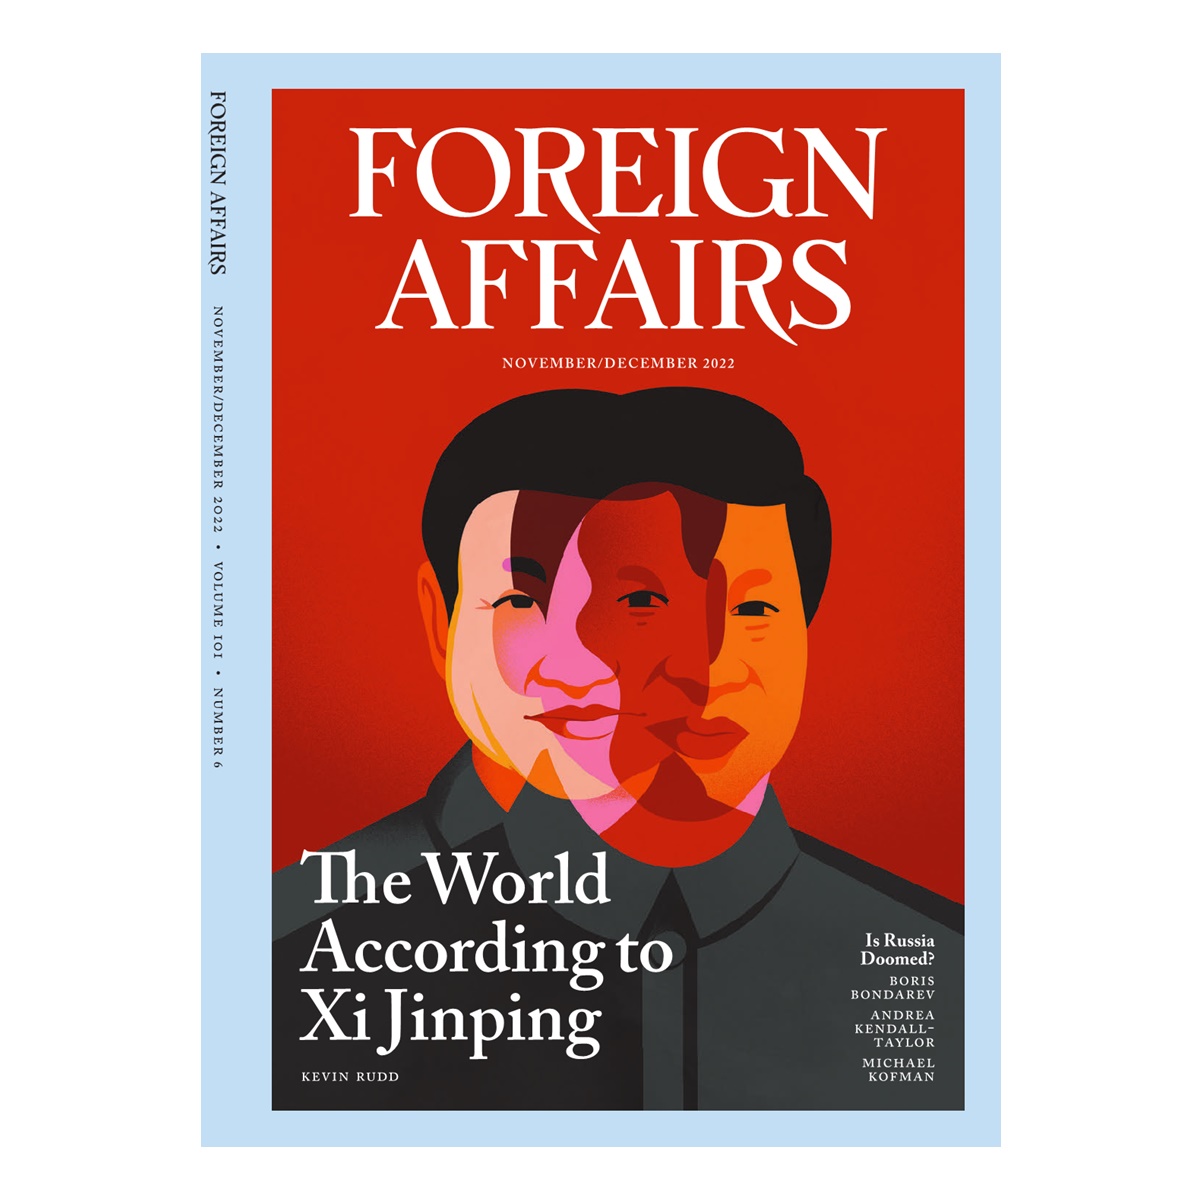 foreign affairs magazine pdf 2022 free download